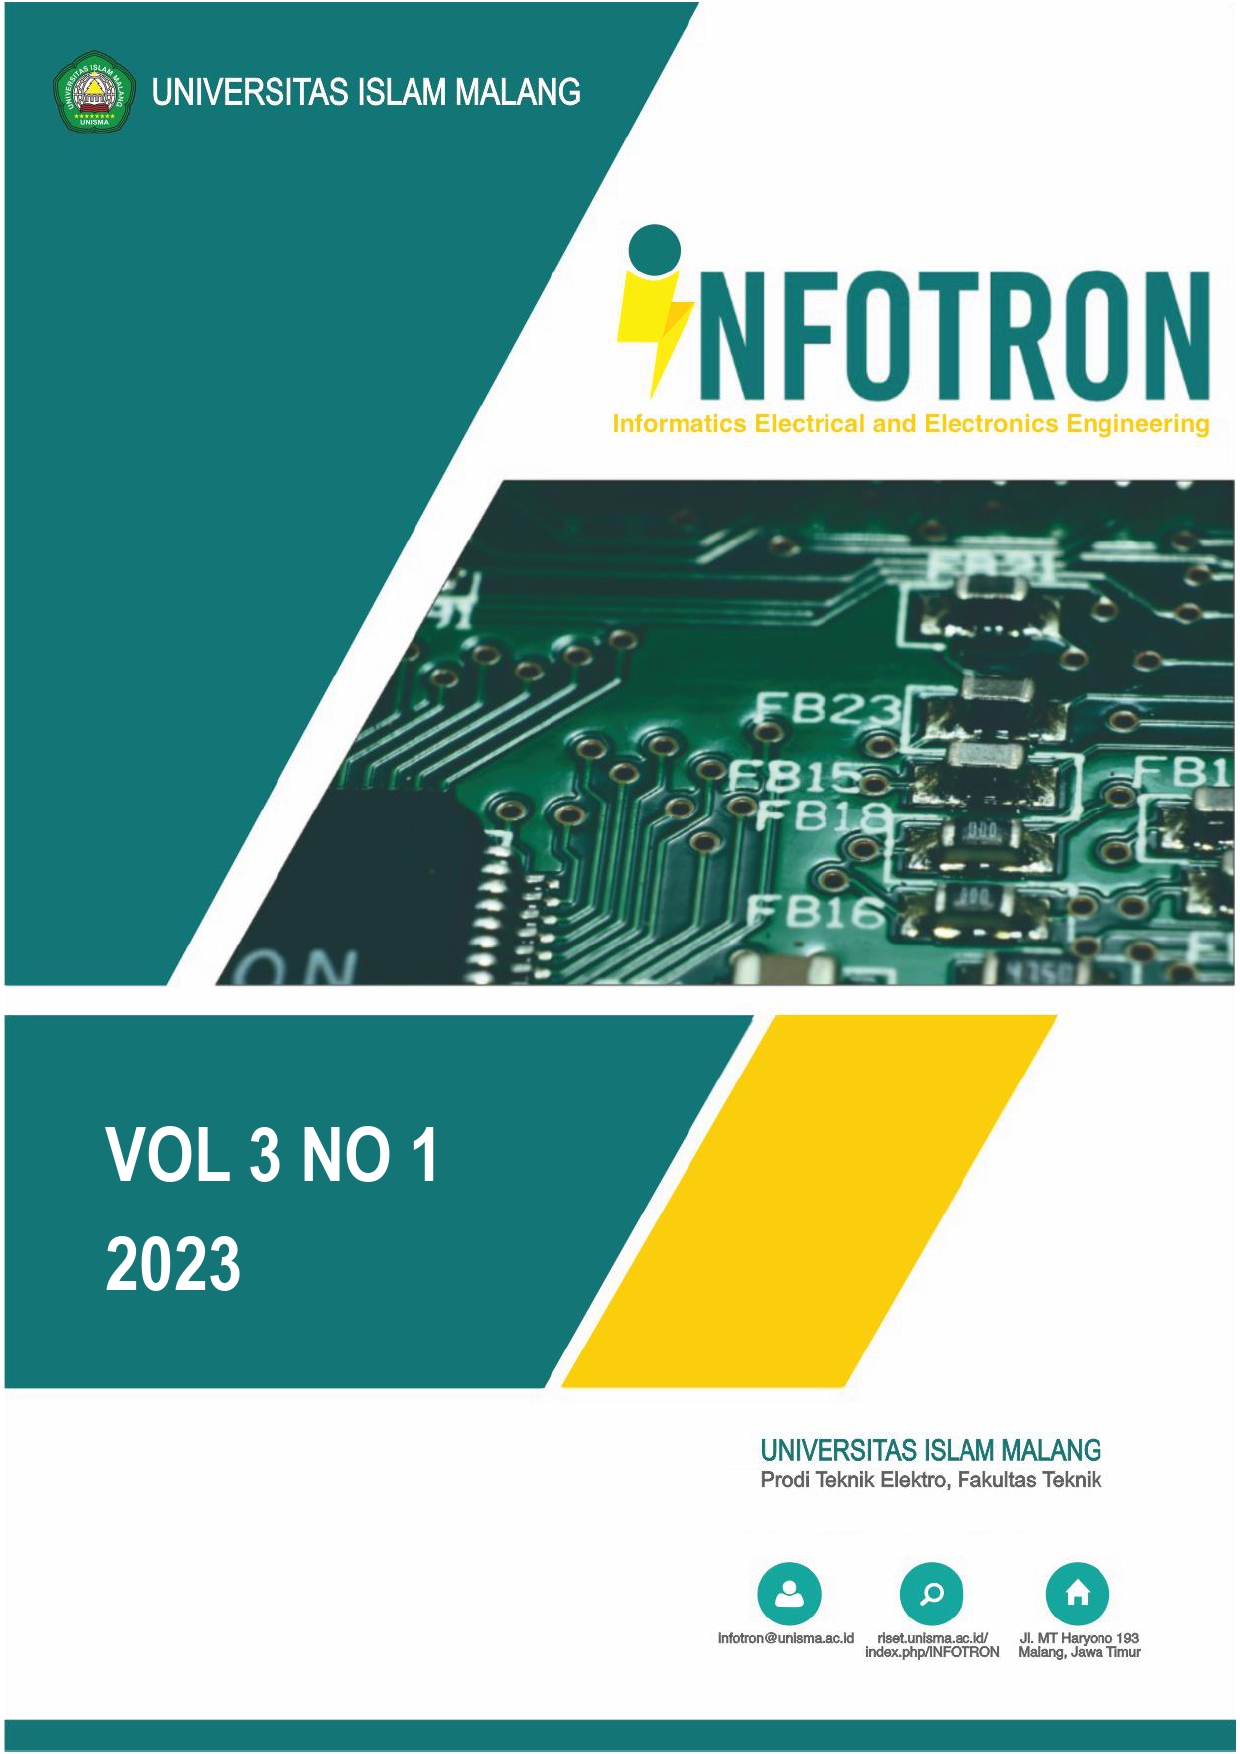 					View Vol. 3 No. 1 (2023): INFOTRON
				